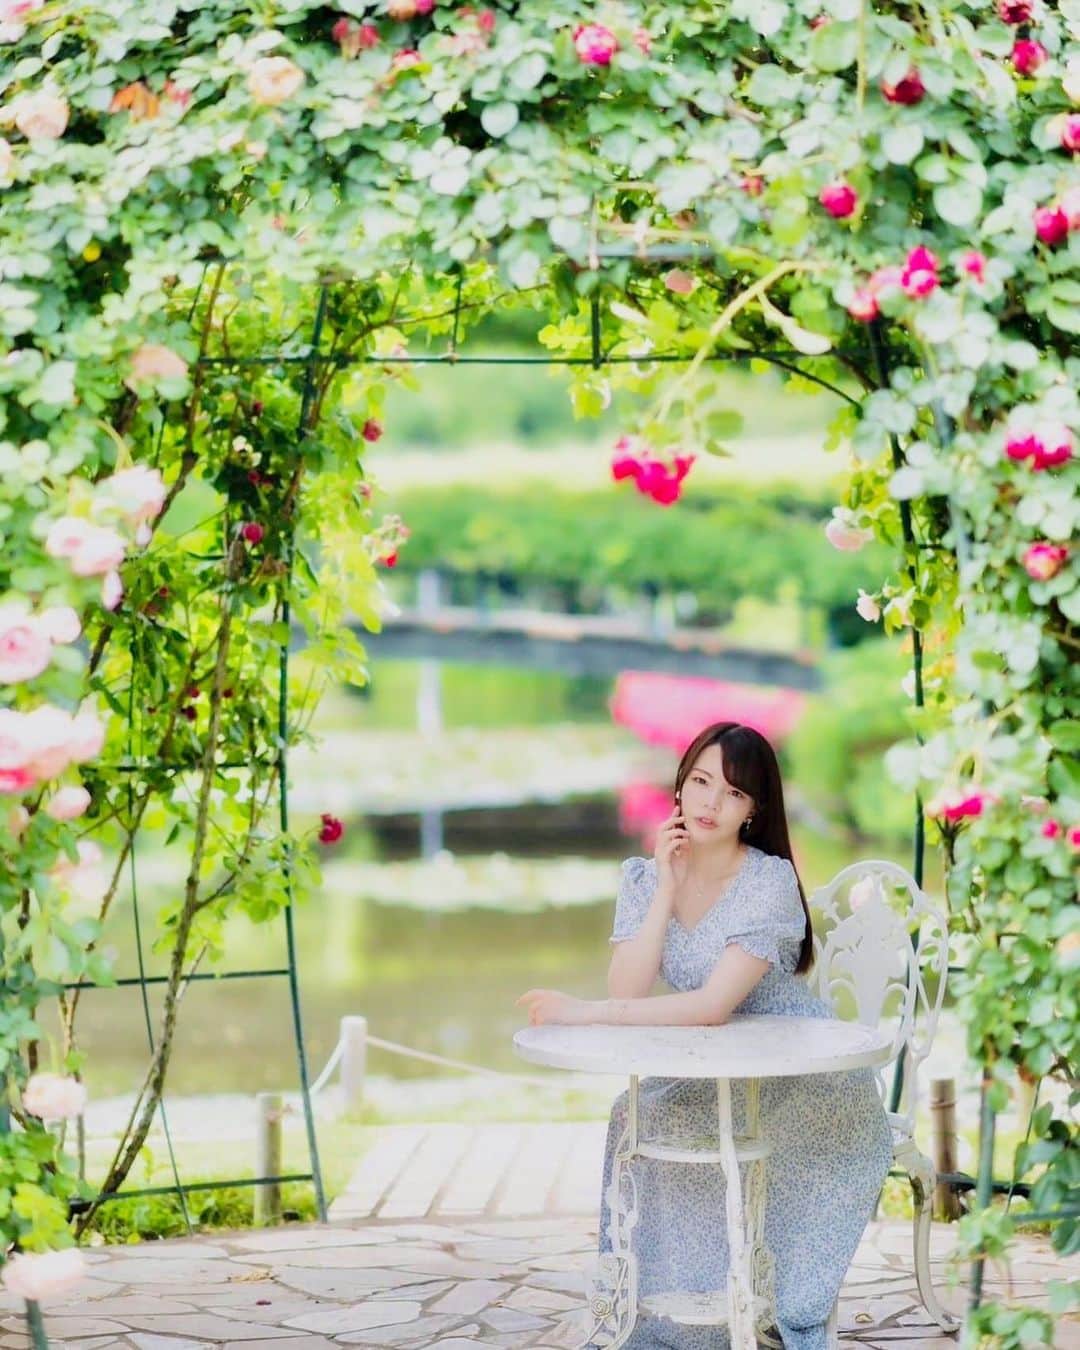 Mikaのインスタグラム：「lovely rose garden✩.*˚  この場所とっても可愛いかった♡  ・ ・ ・ photo by @ppmacky 📸 model @mikarin_portrait  ・ ・ ・ ・ follow me💋  #美花展 #ローズガーデン #バラ園 #薔薇のある生活  #薔薇園  #ローズガーデン #ガーデニングライフ  #花が好きな人と繫がりたい  #誰かの記憶に残る写真 #カメラ好きな人と繋がりたい #ファインダー越しの私の世界 #ポトレファン倶楽部 #被写体モデル #その瞬間は永遠の思い出 #みんなのフォト #ポトレ女子 #撮影依頼募集中 #jp_portrait部 #japanesegirl #asianbeauty #global_ladies #photo_shorttrip #_lovely_weekend #japan_art_photography #portraitfestival #portraitinlove #portrait_mood #exclusive_world_portrait  #instagood #instagramjapan」